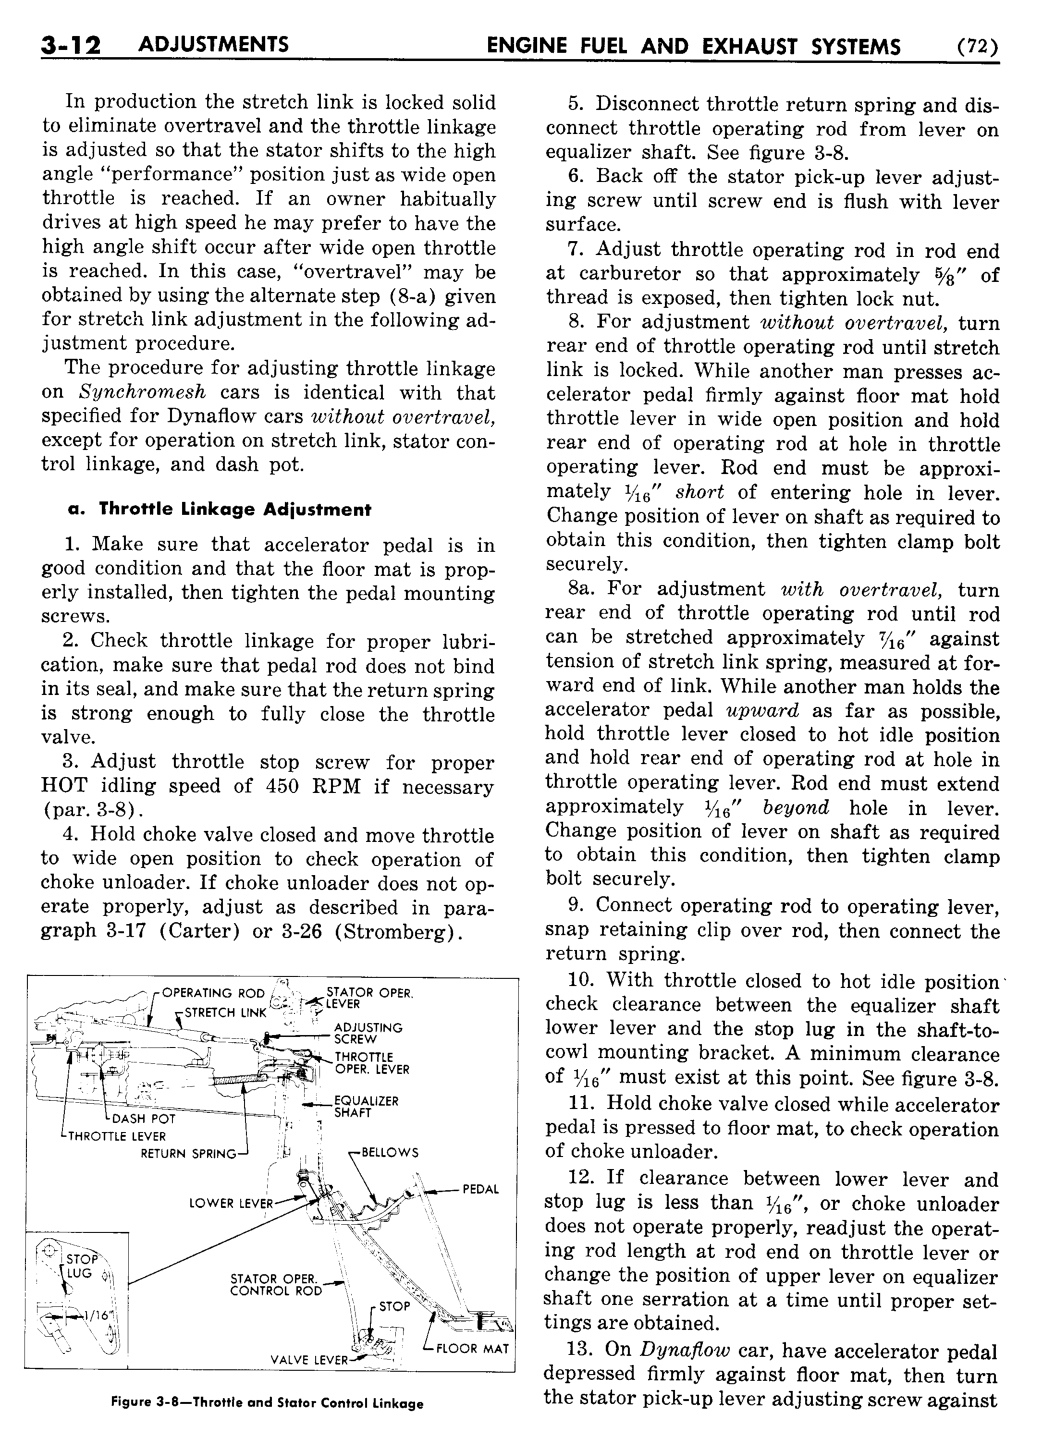 n_04 1955 Buick Shop Manual - Engine Fuel & Exhaust-012-012.jpg